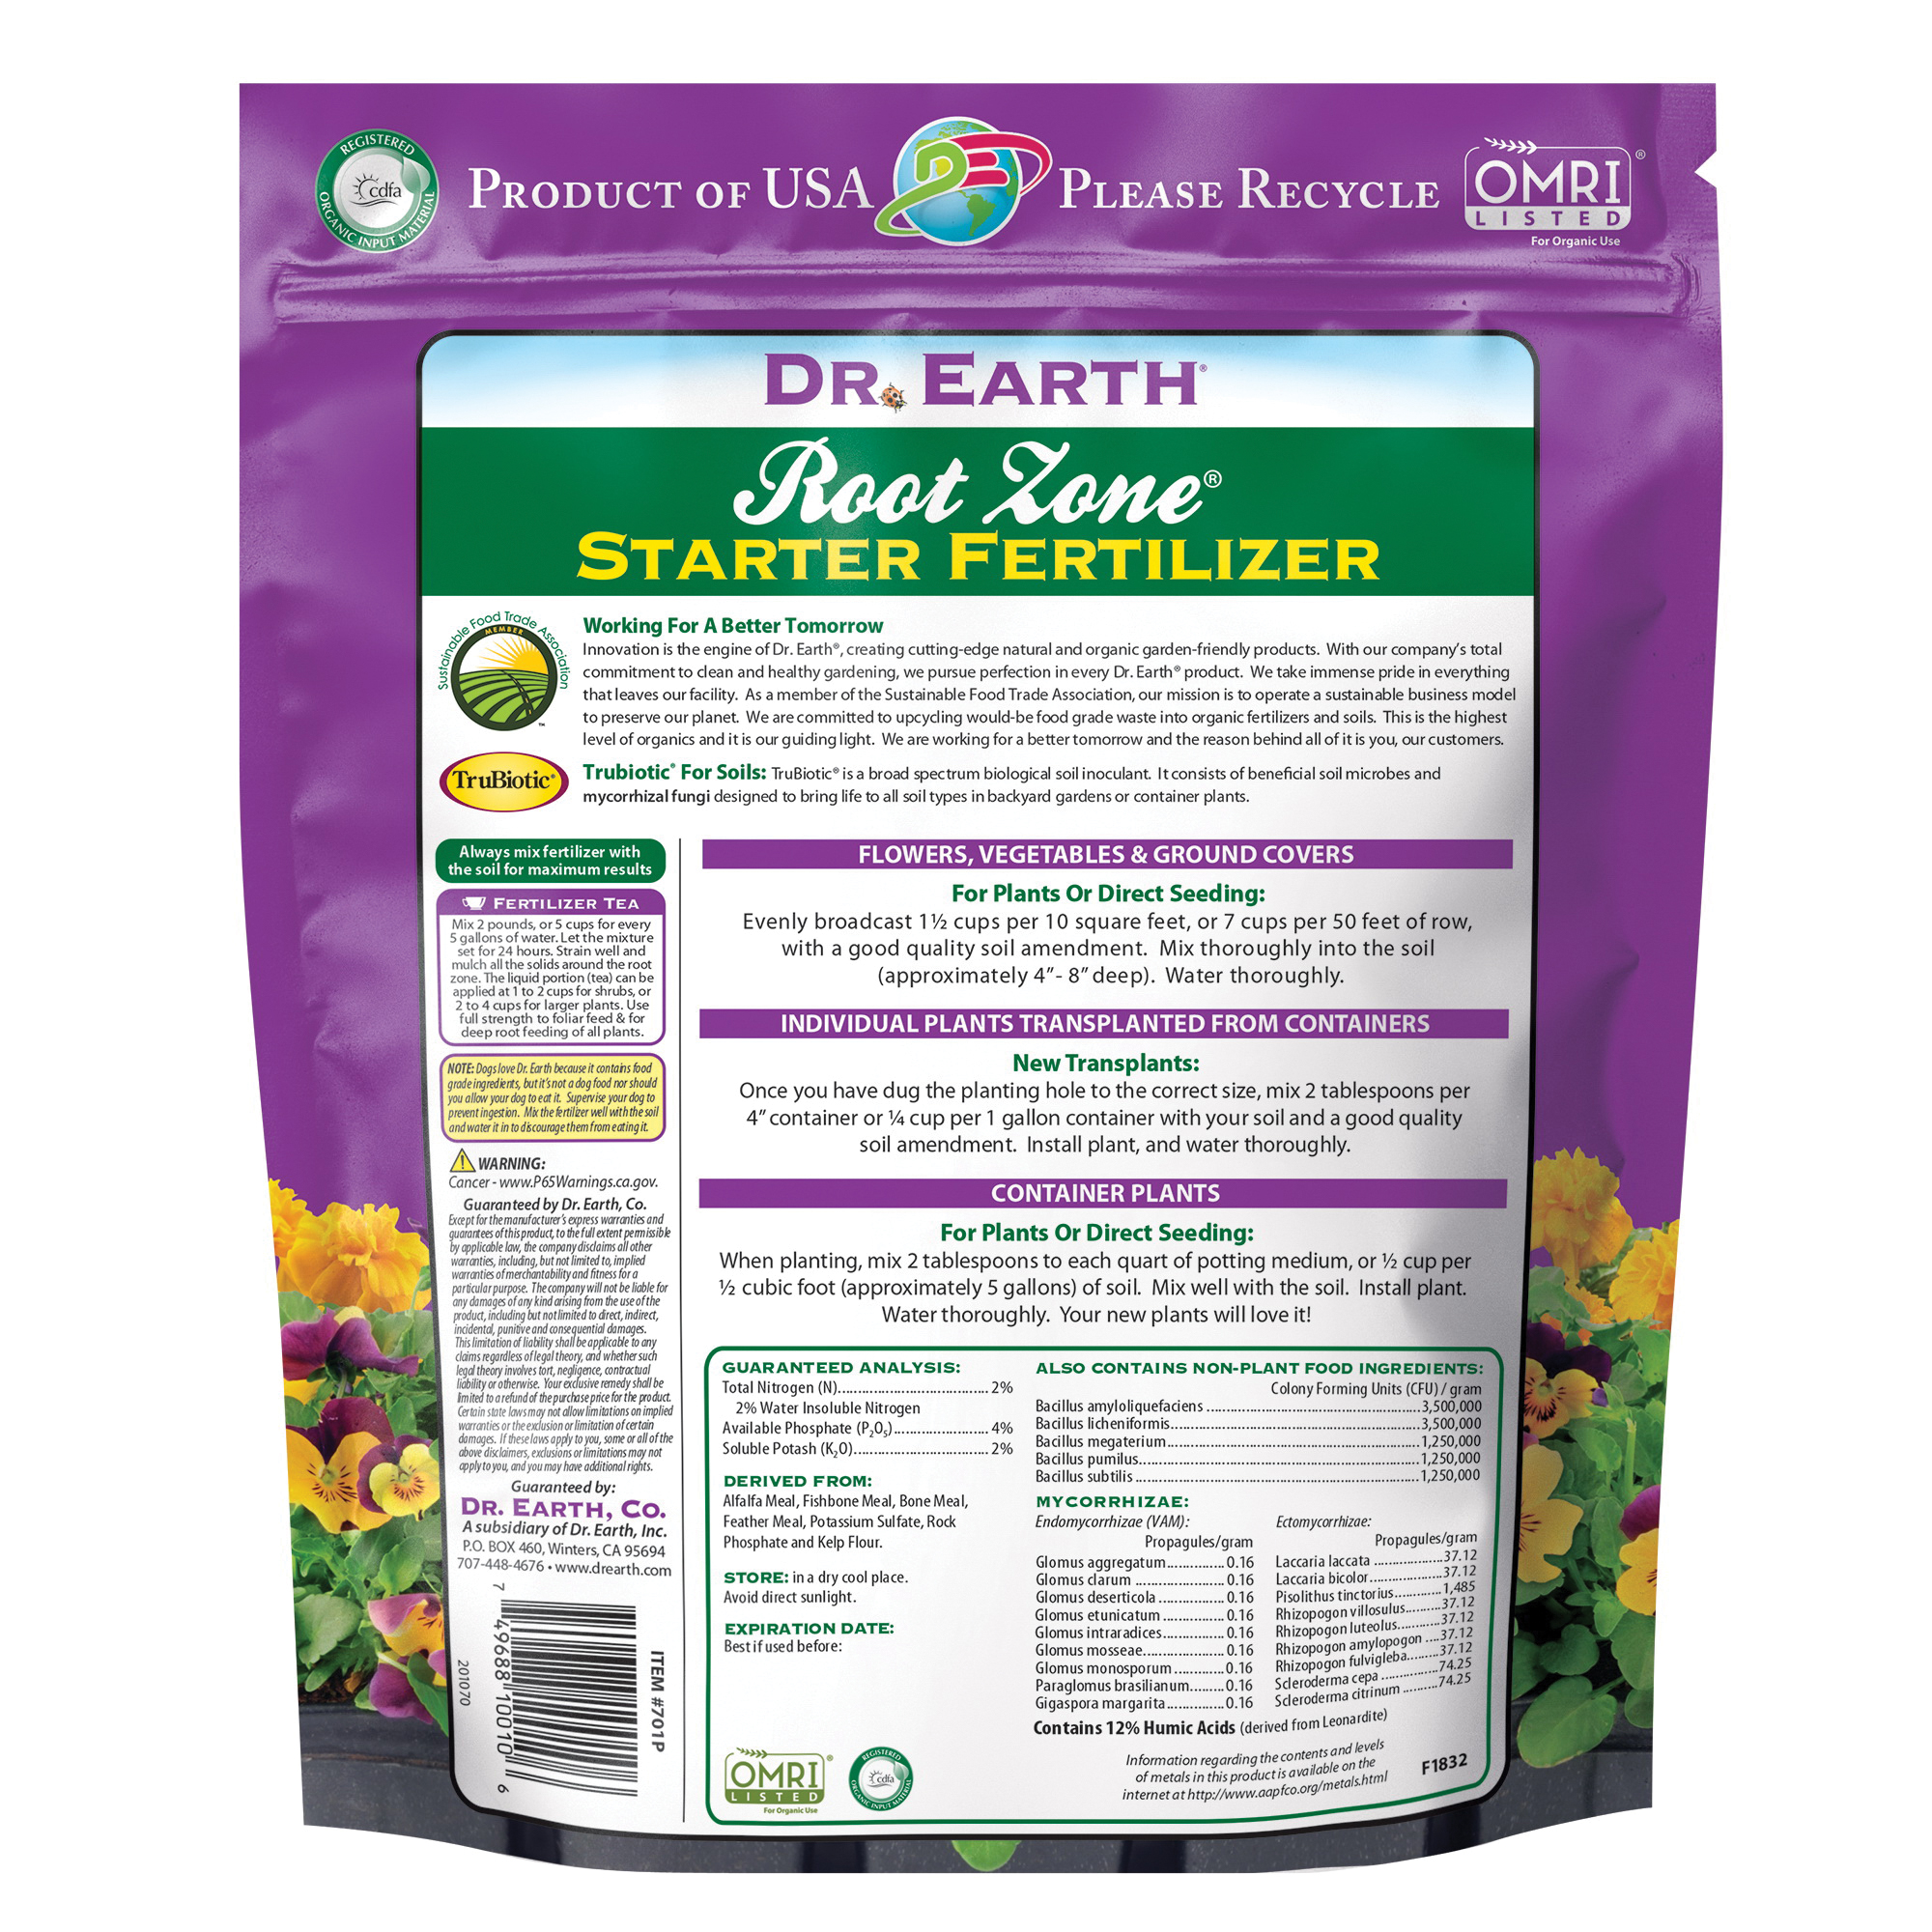 Dr. Earth 701P Starter Fertilizer, 4 lb, Granular, 2-4-2 N-P-K Ratio - 2